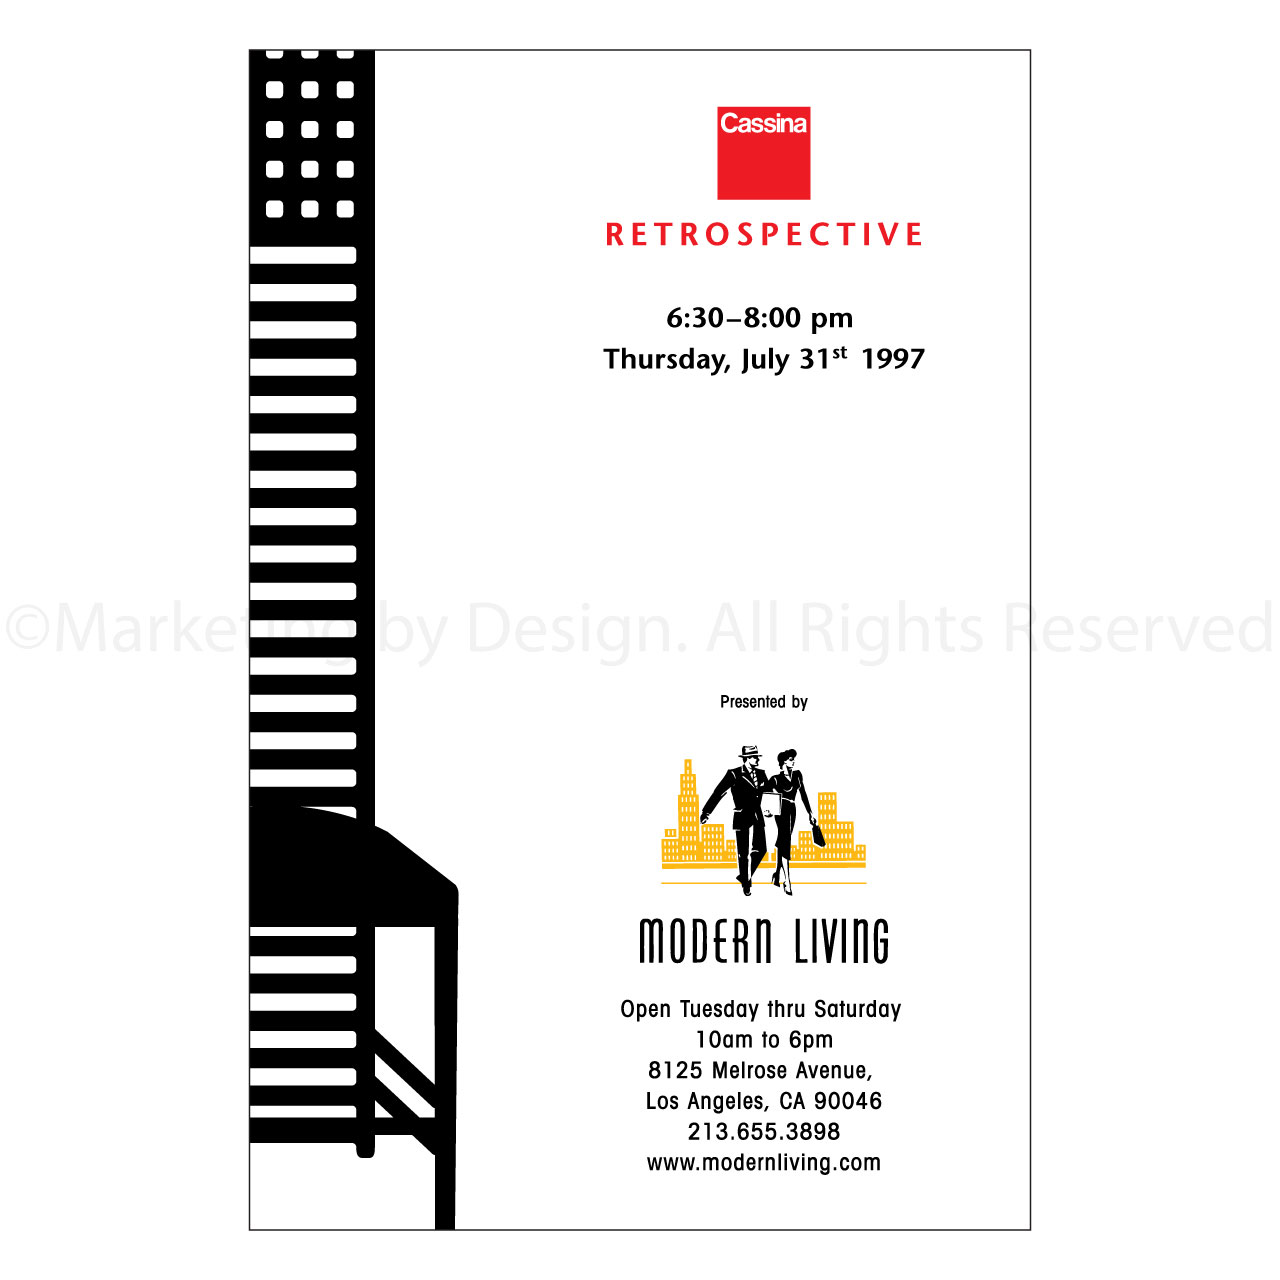 Marketing by Design | Portfolio: Modern Living Retrospective Ad